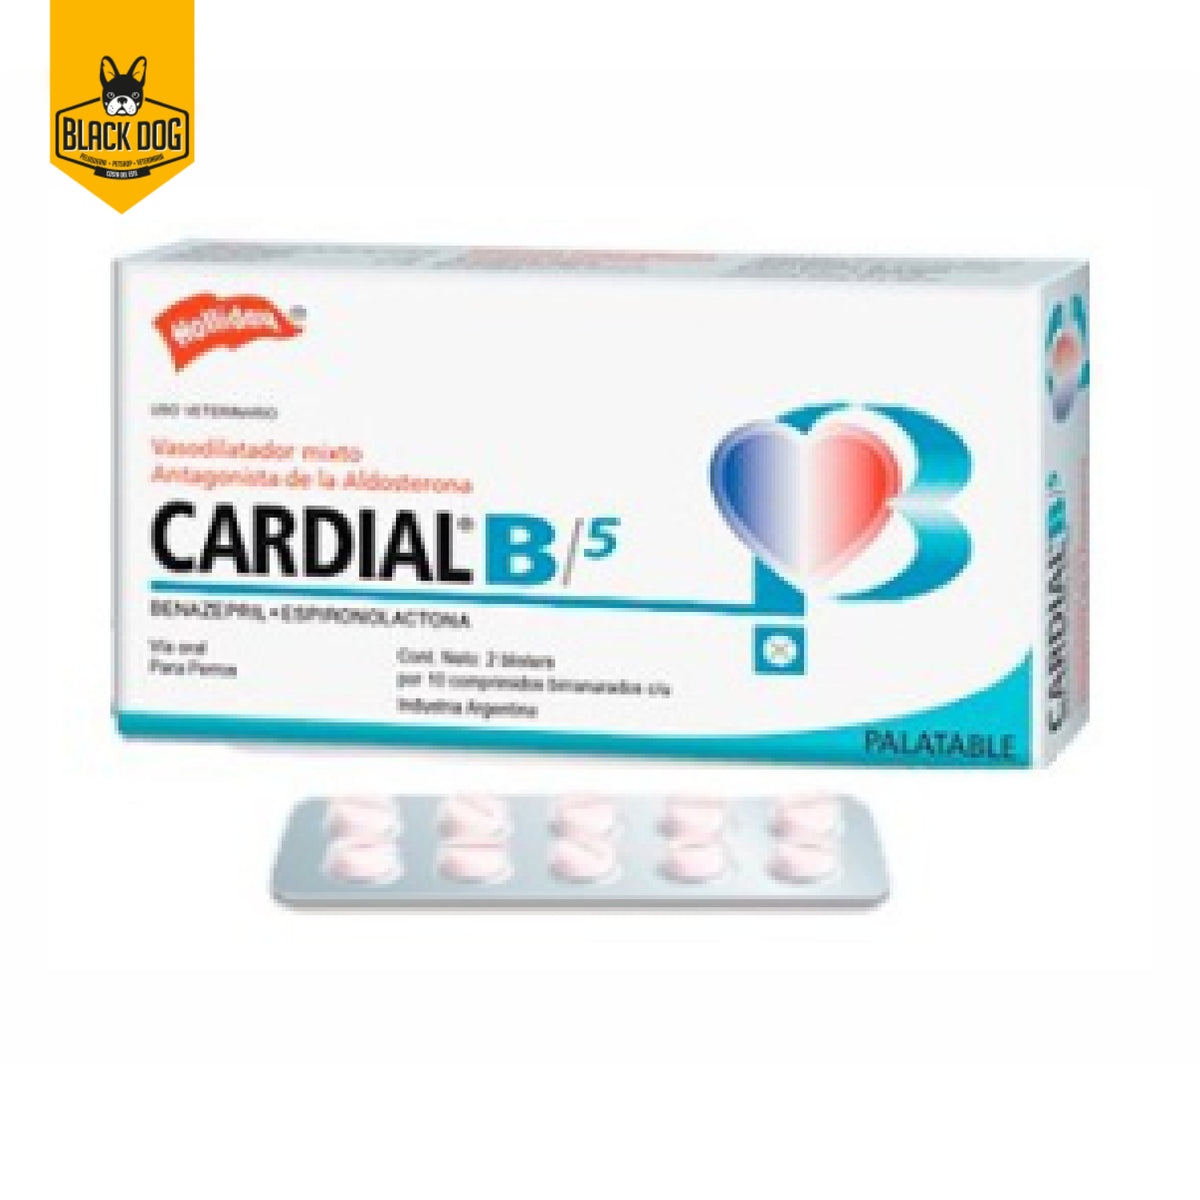 CARDIAL B | Benazepril - Espironolactona | 20 Comprimidos | B2.5 | B5 | B10 - BlackDogPanama